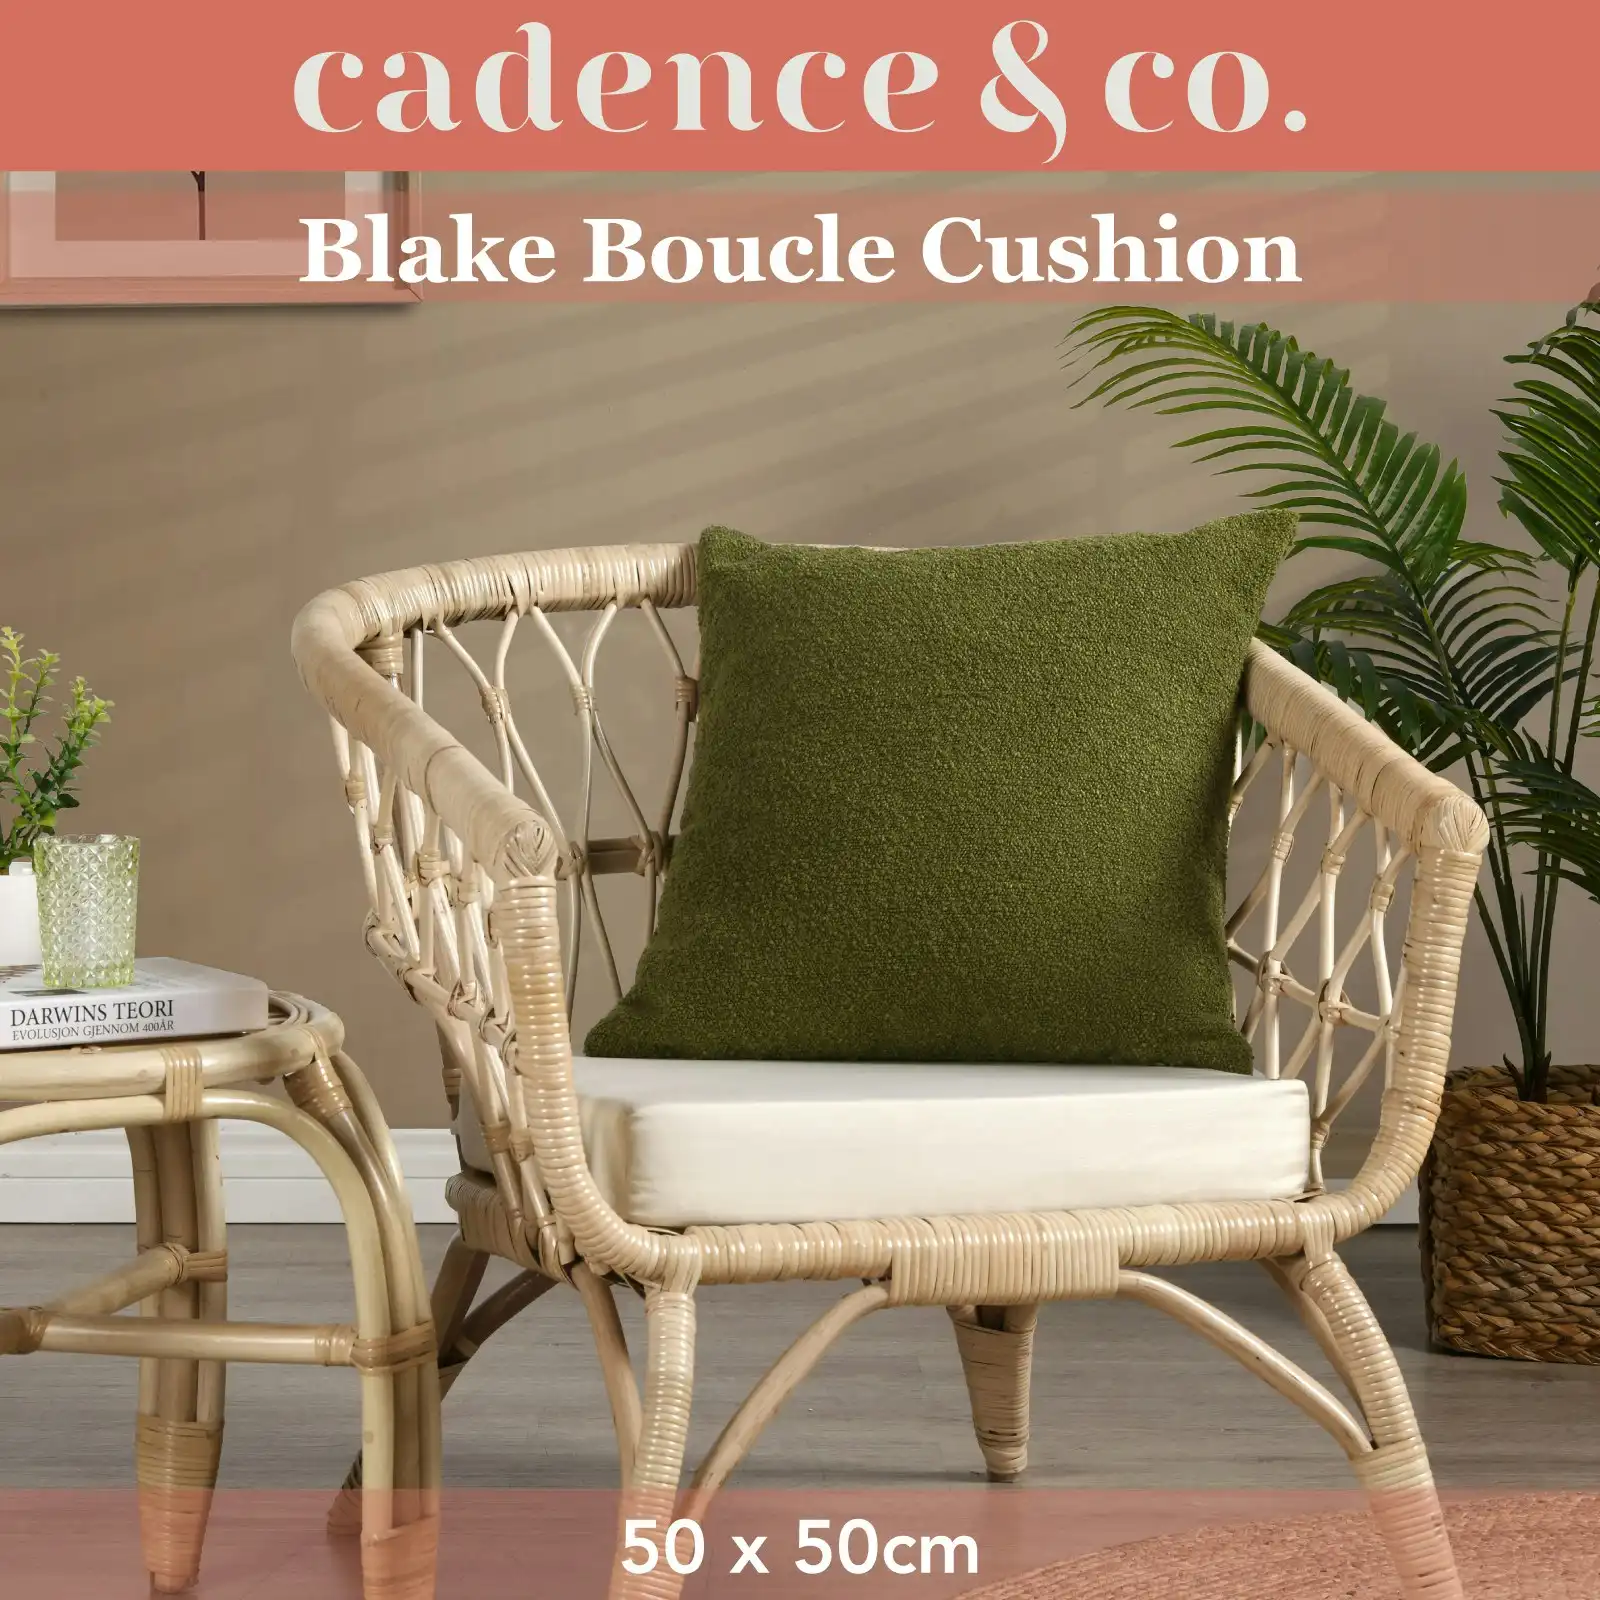 Cadence & Co. Blake Boucle Cushion Moss Green 50x50cm